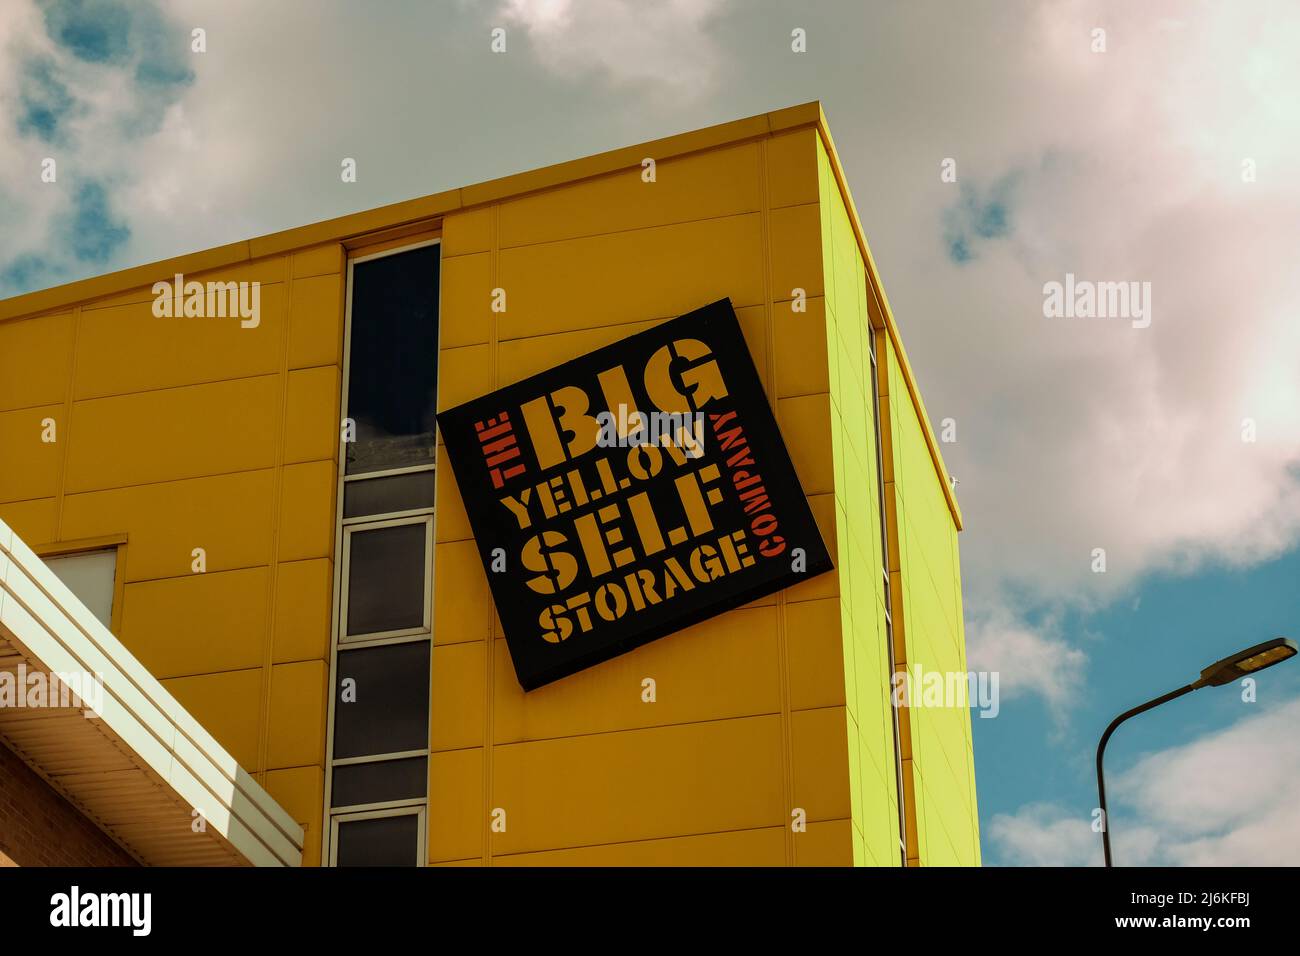 London- The Big Yellow Self Storage Company exterior sign, a British chain of self storage warehouses Stock Photo